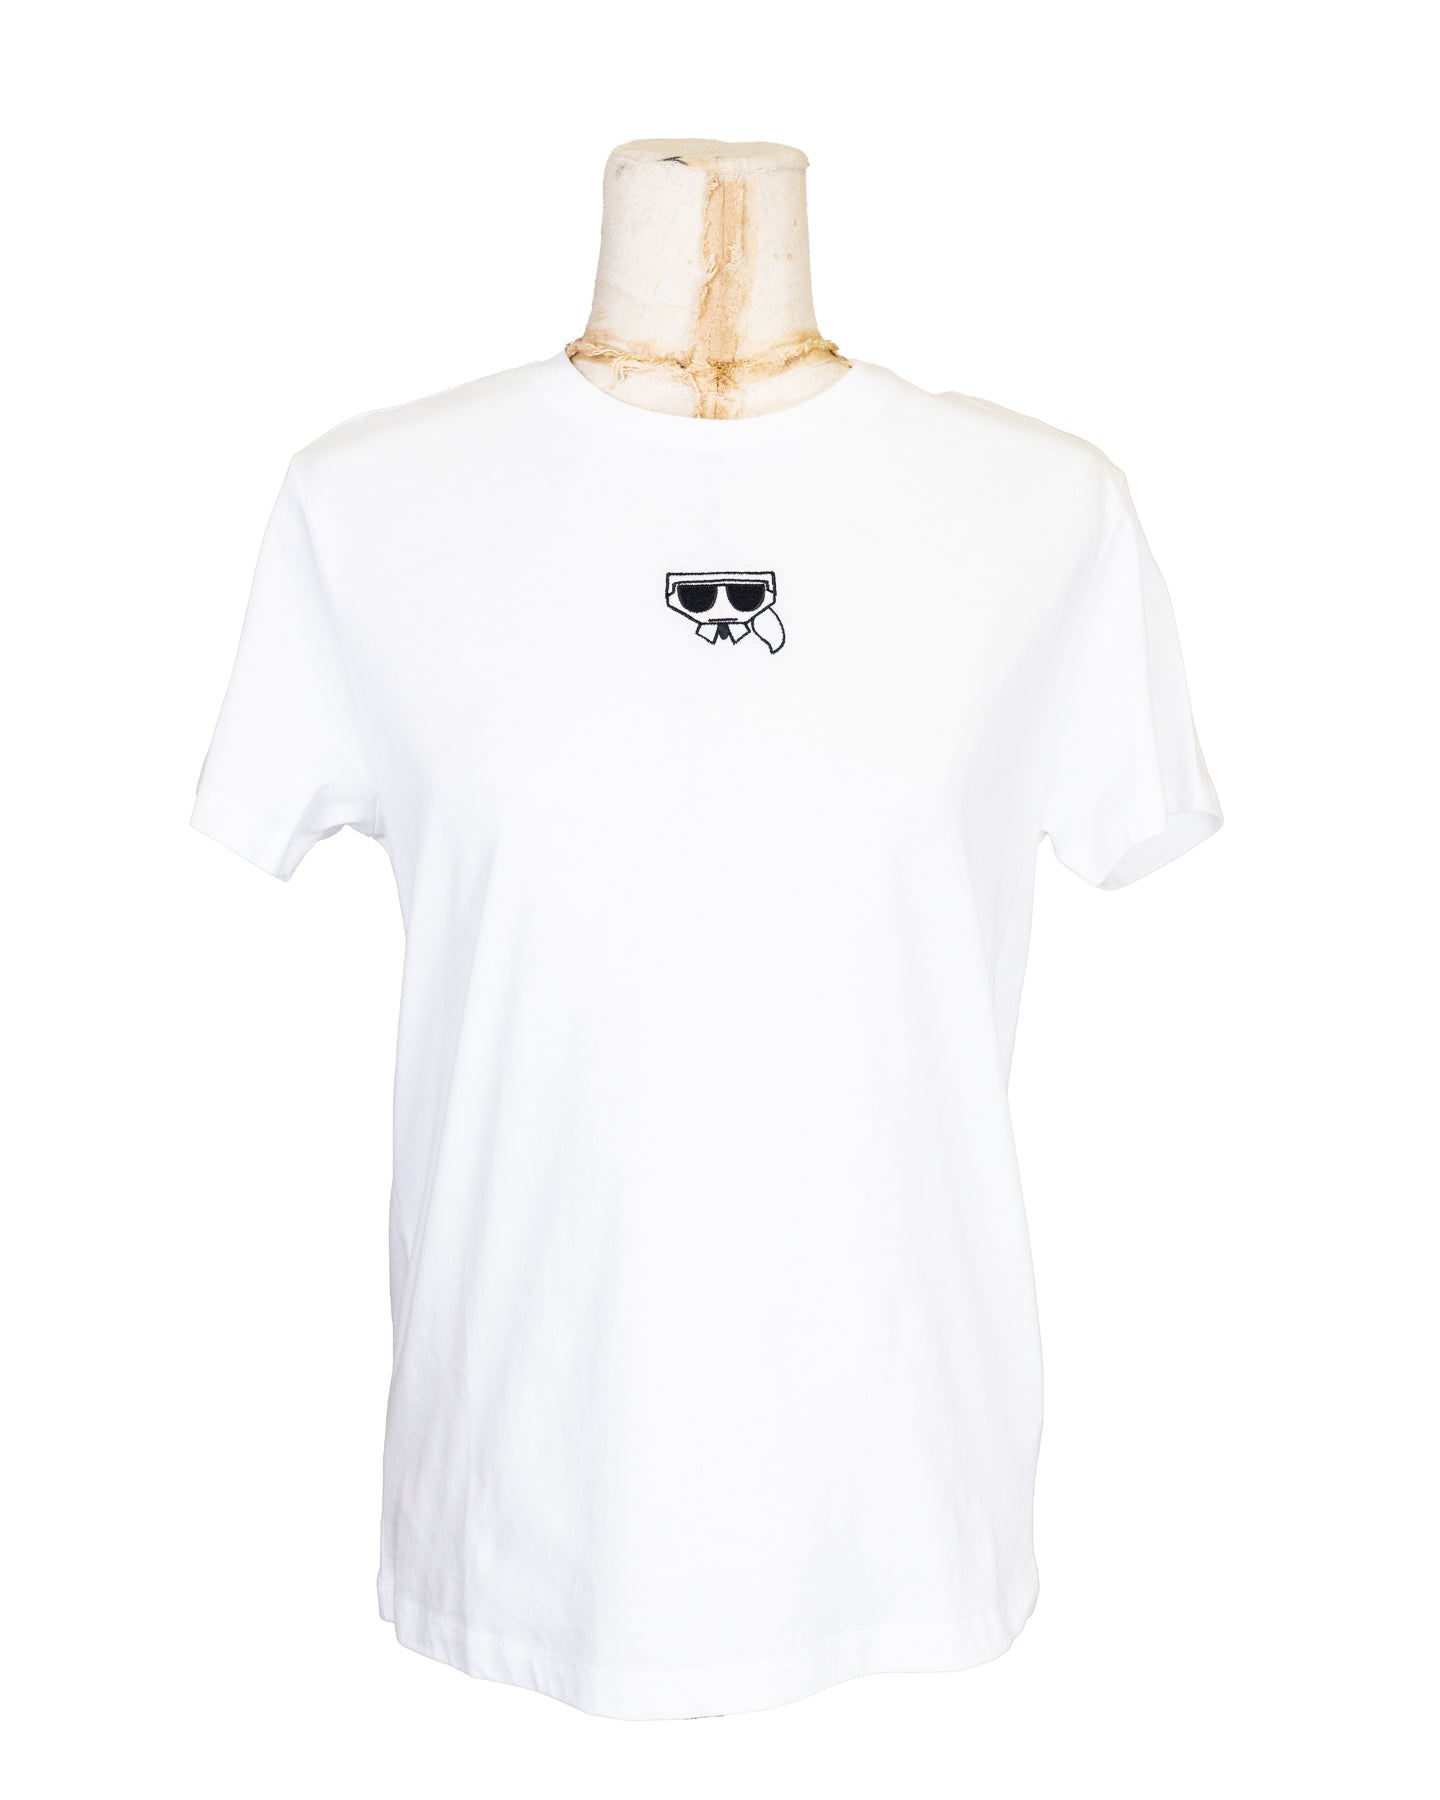 Camiseta Branca Karl Lagerfeld - Nova com Etiquetas